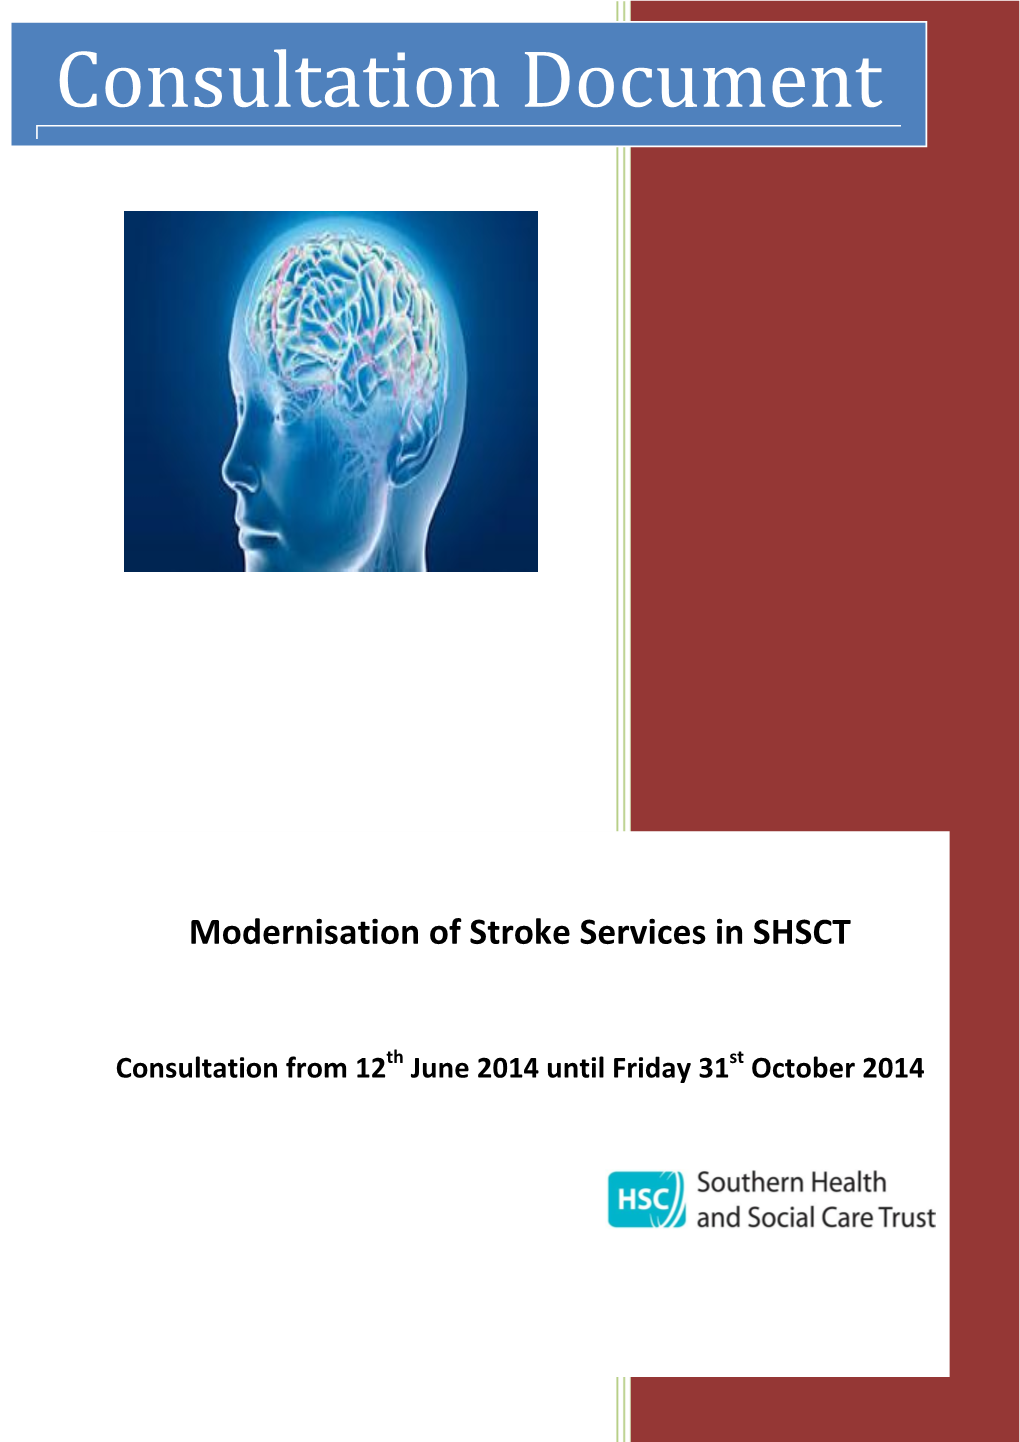 Modernisation of Stroke Services in SHSCT